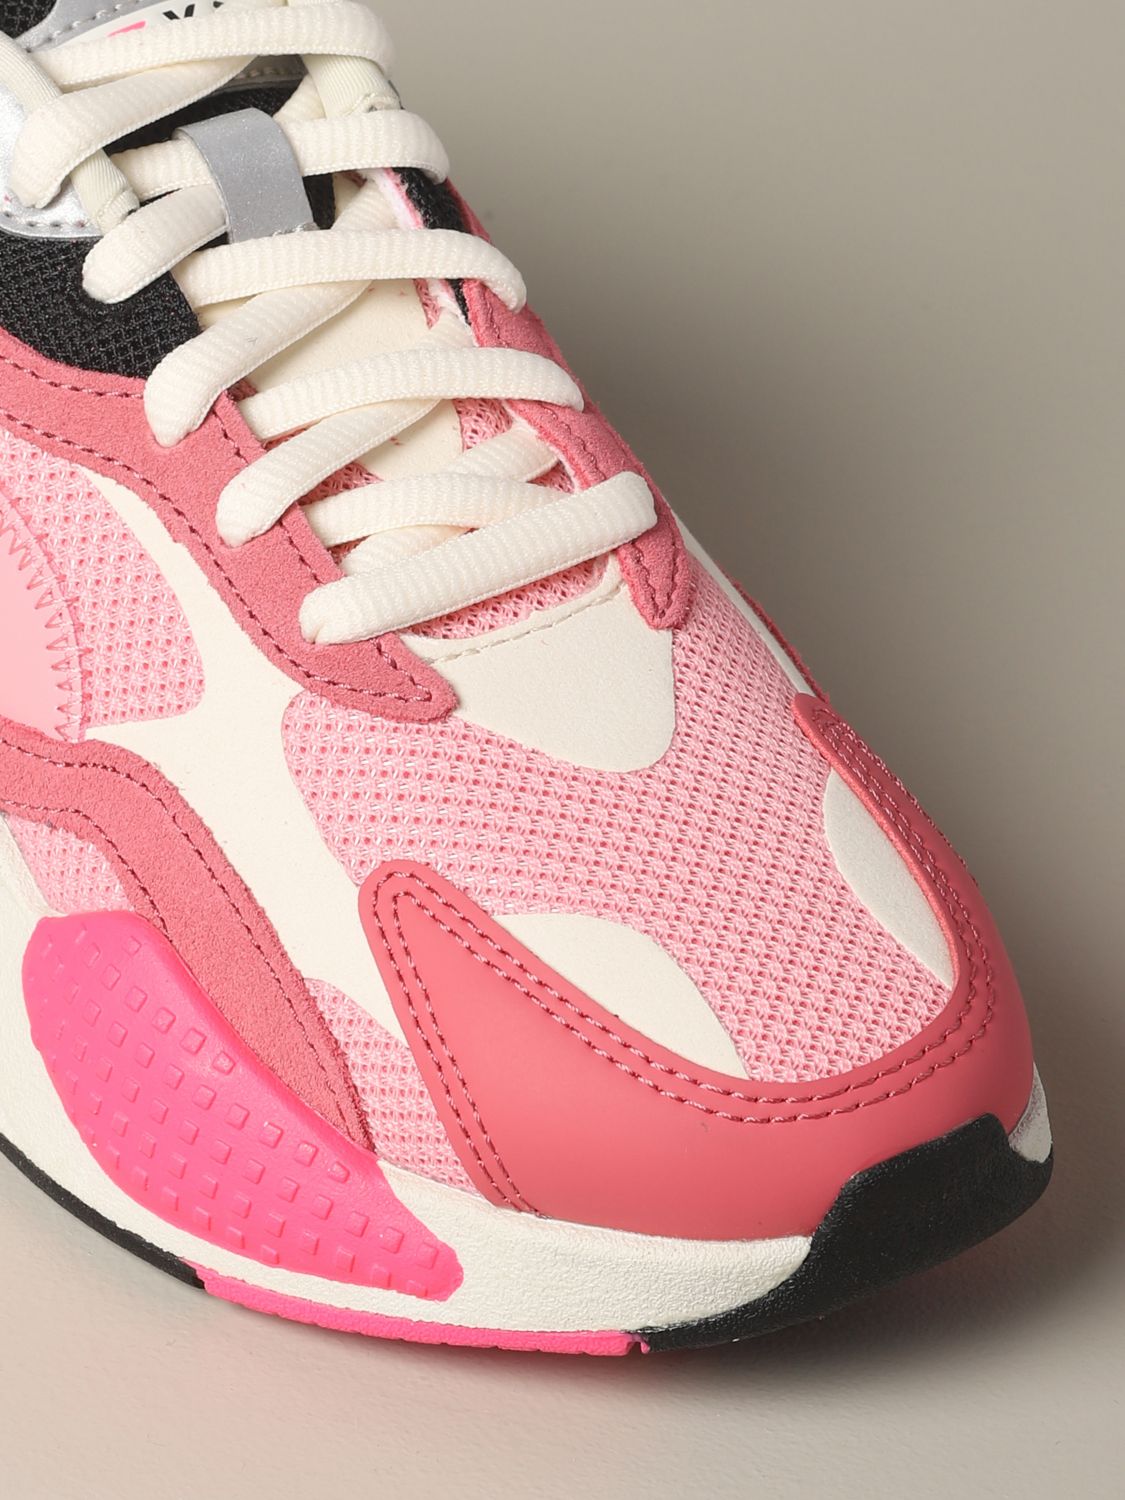 puma women shoes pink